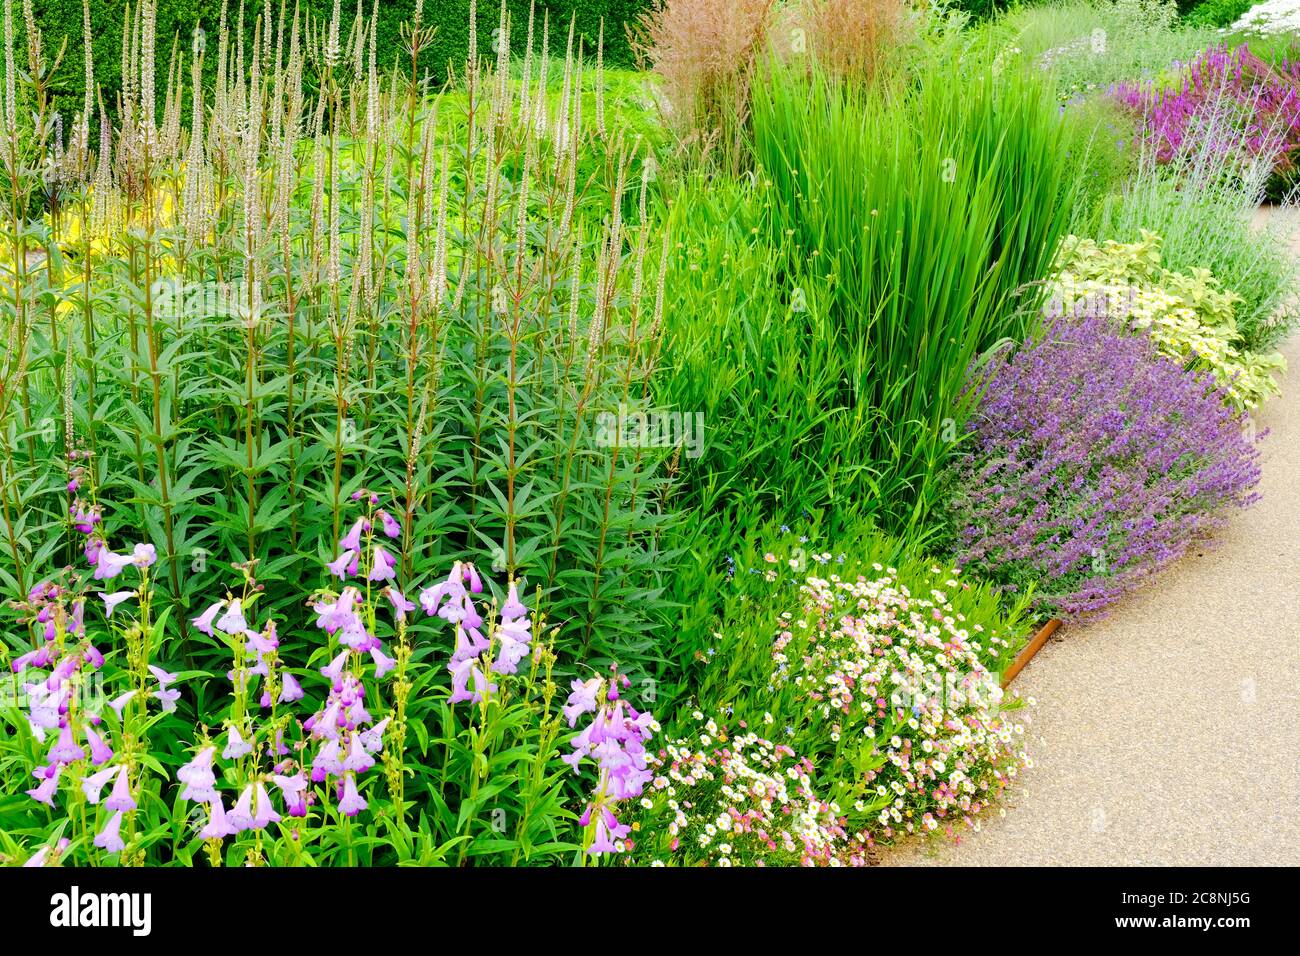 Lush English summer garden border - John Gollop Stock Photo